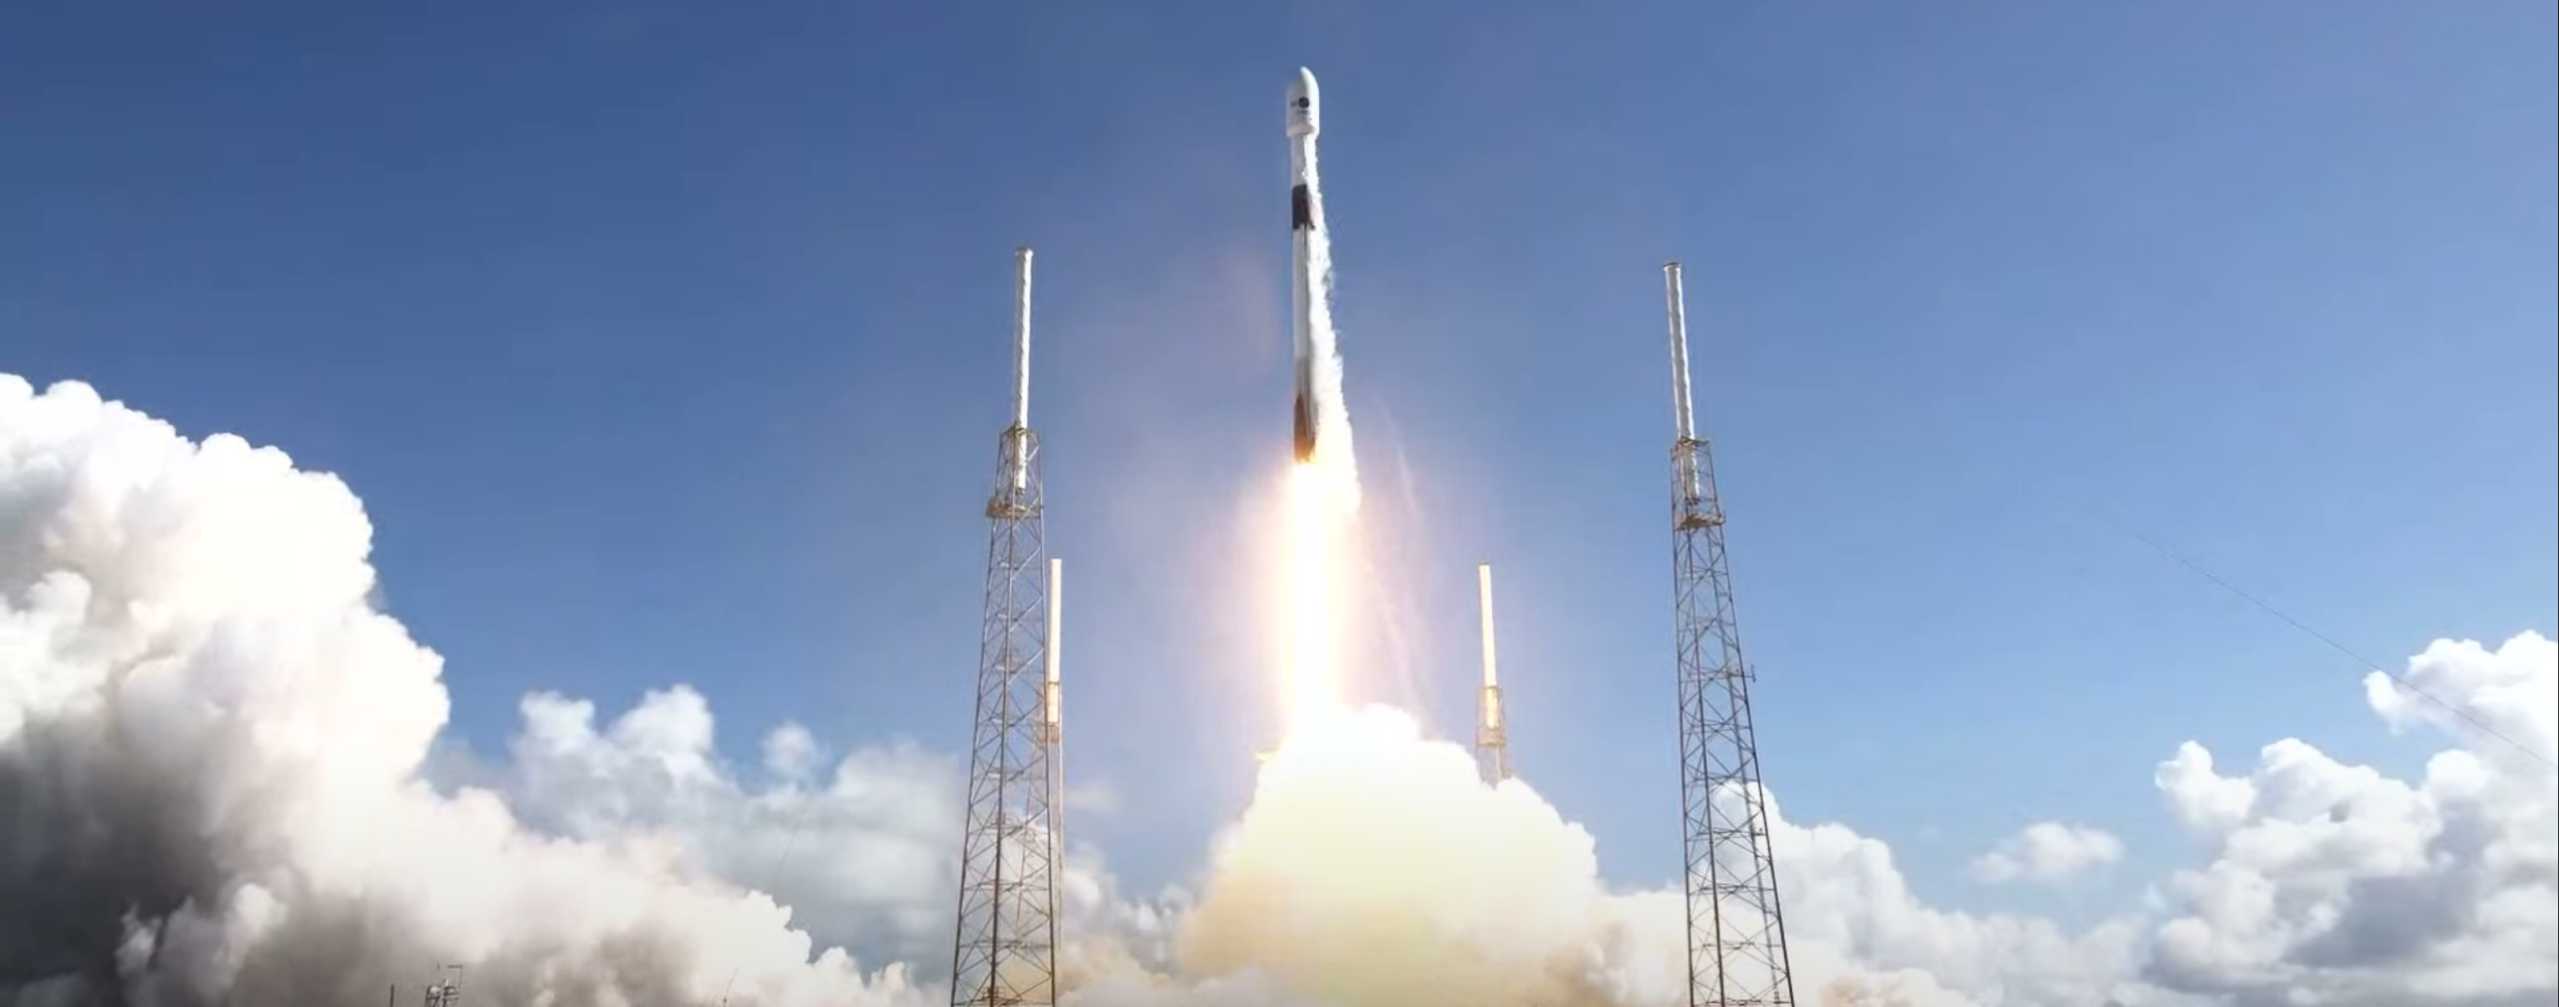 ANASIS II Falcon 9 B1058 LC-40 072020 (SpaceX) liftoff 1 (c)